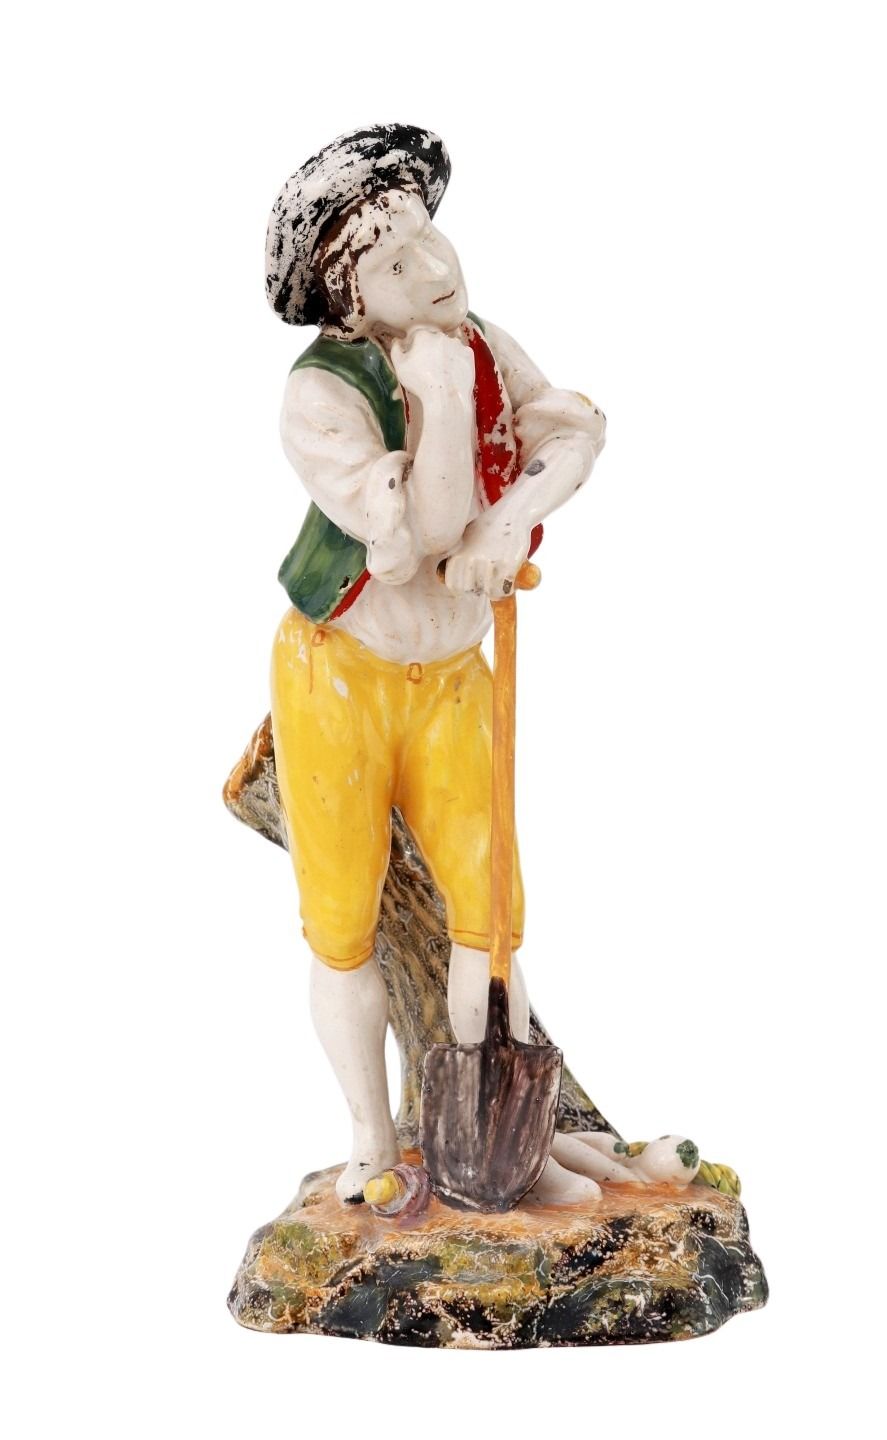 crailsheim-faience-gardener-figure-18th-century